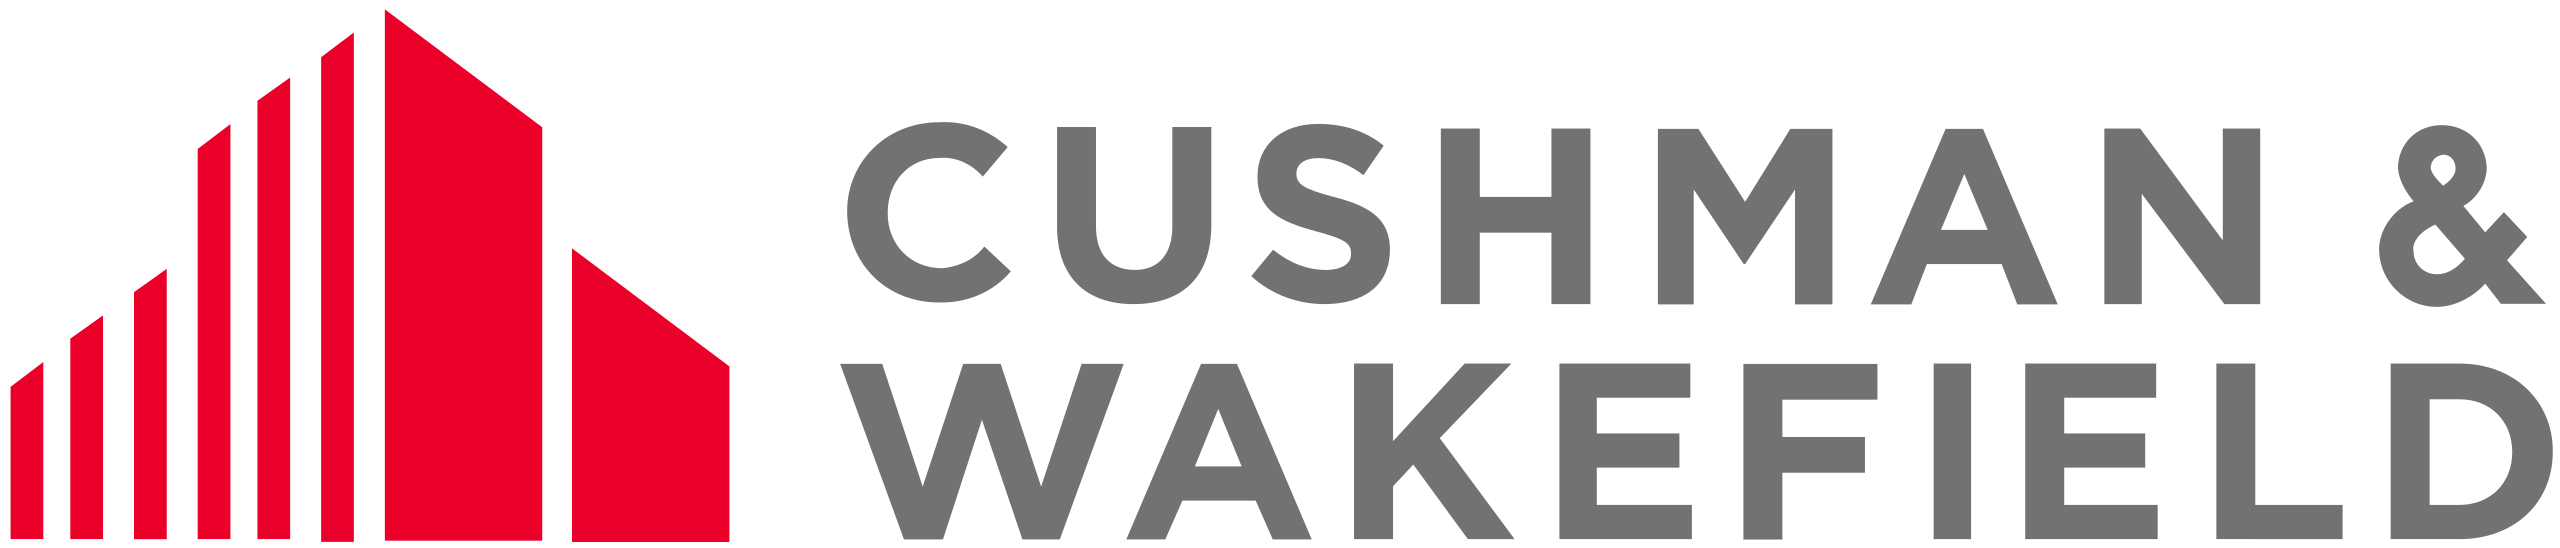 Cushman__Wakefield_logo.svg.png